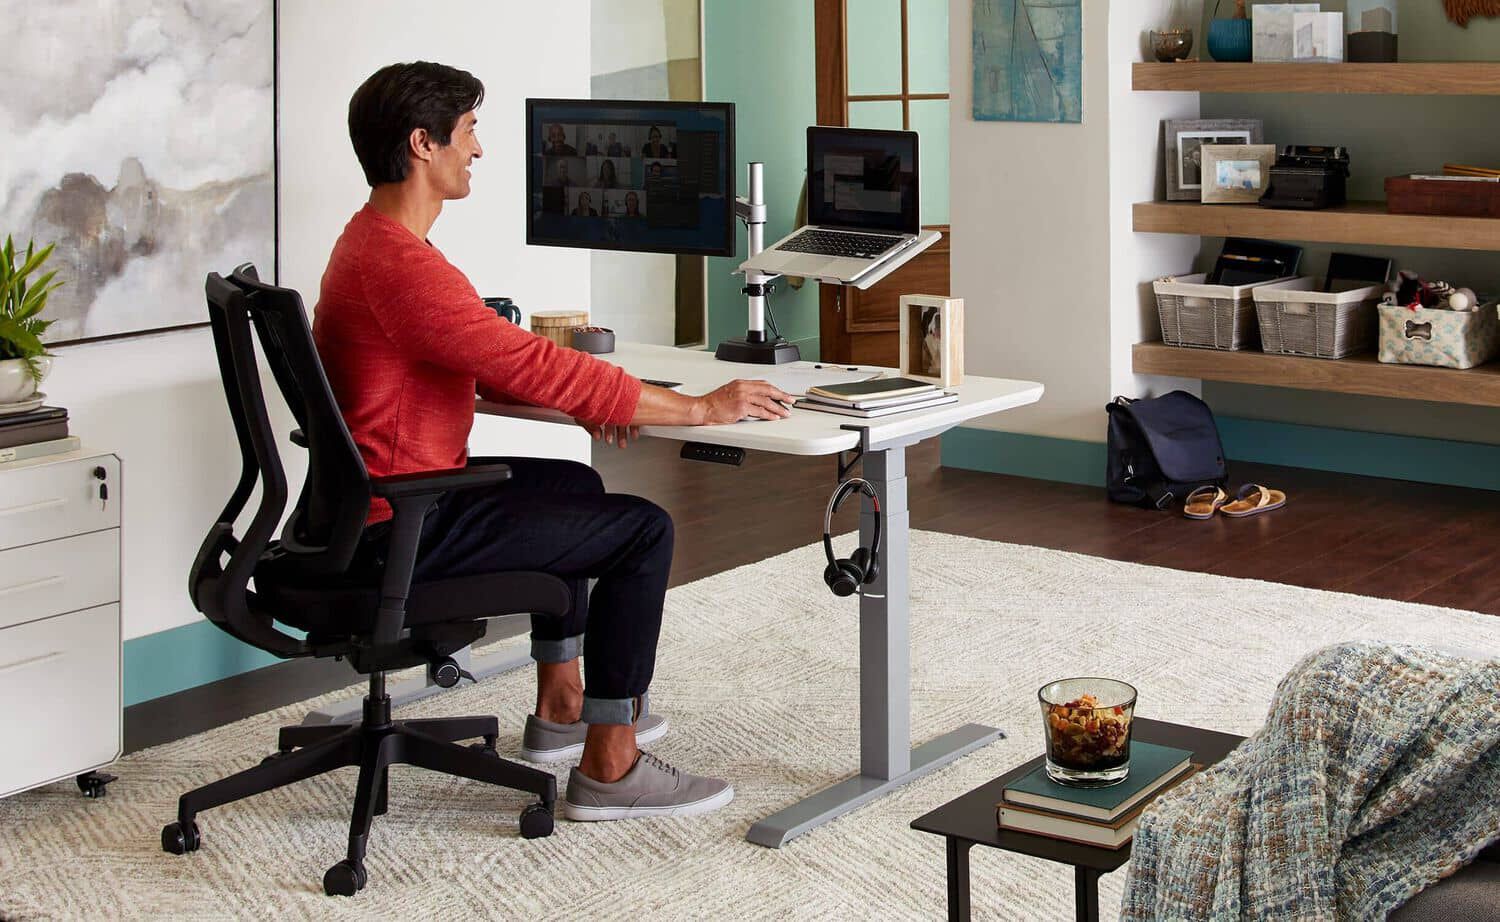 Vari Standing Desks & Office Furniture